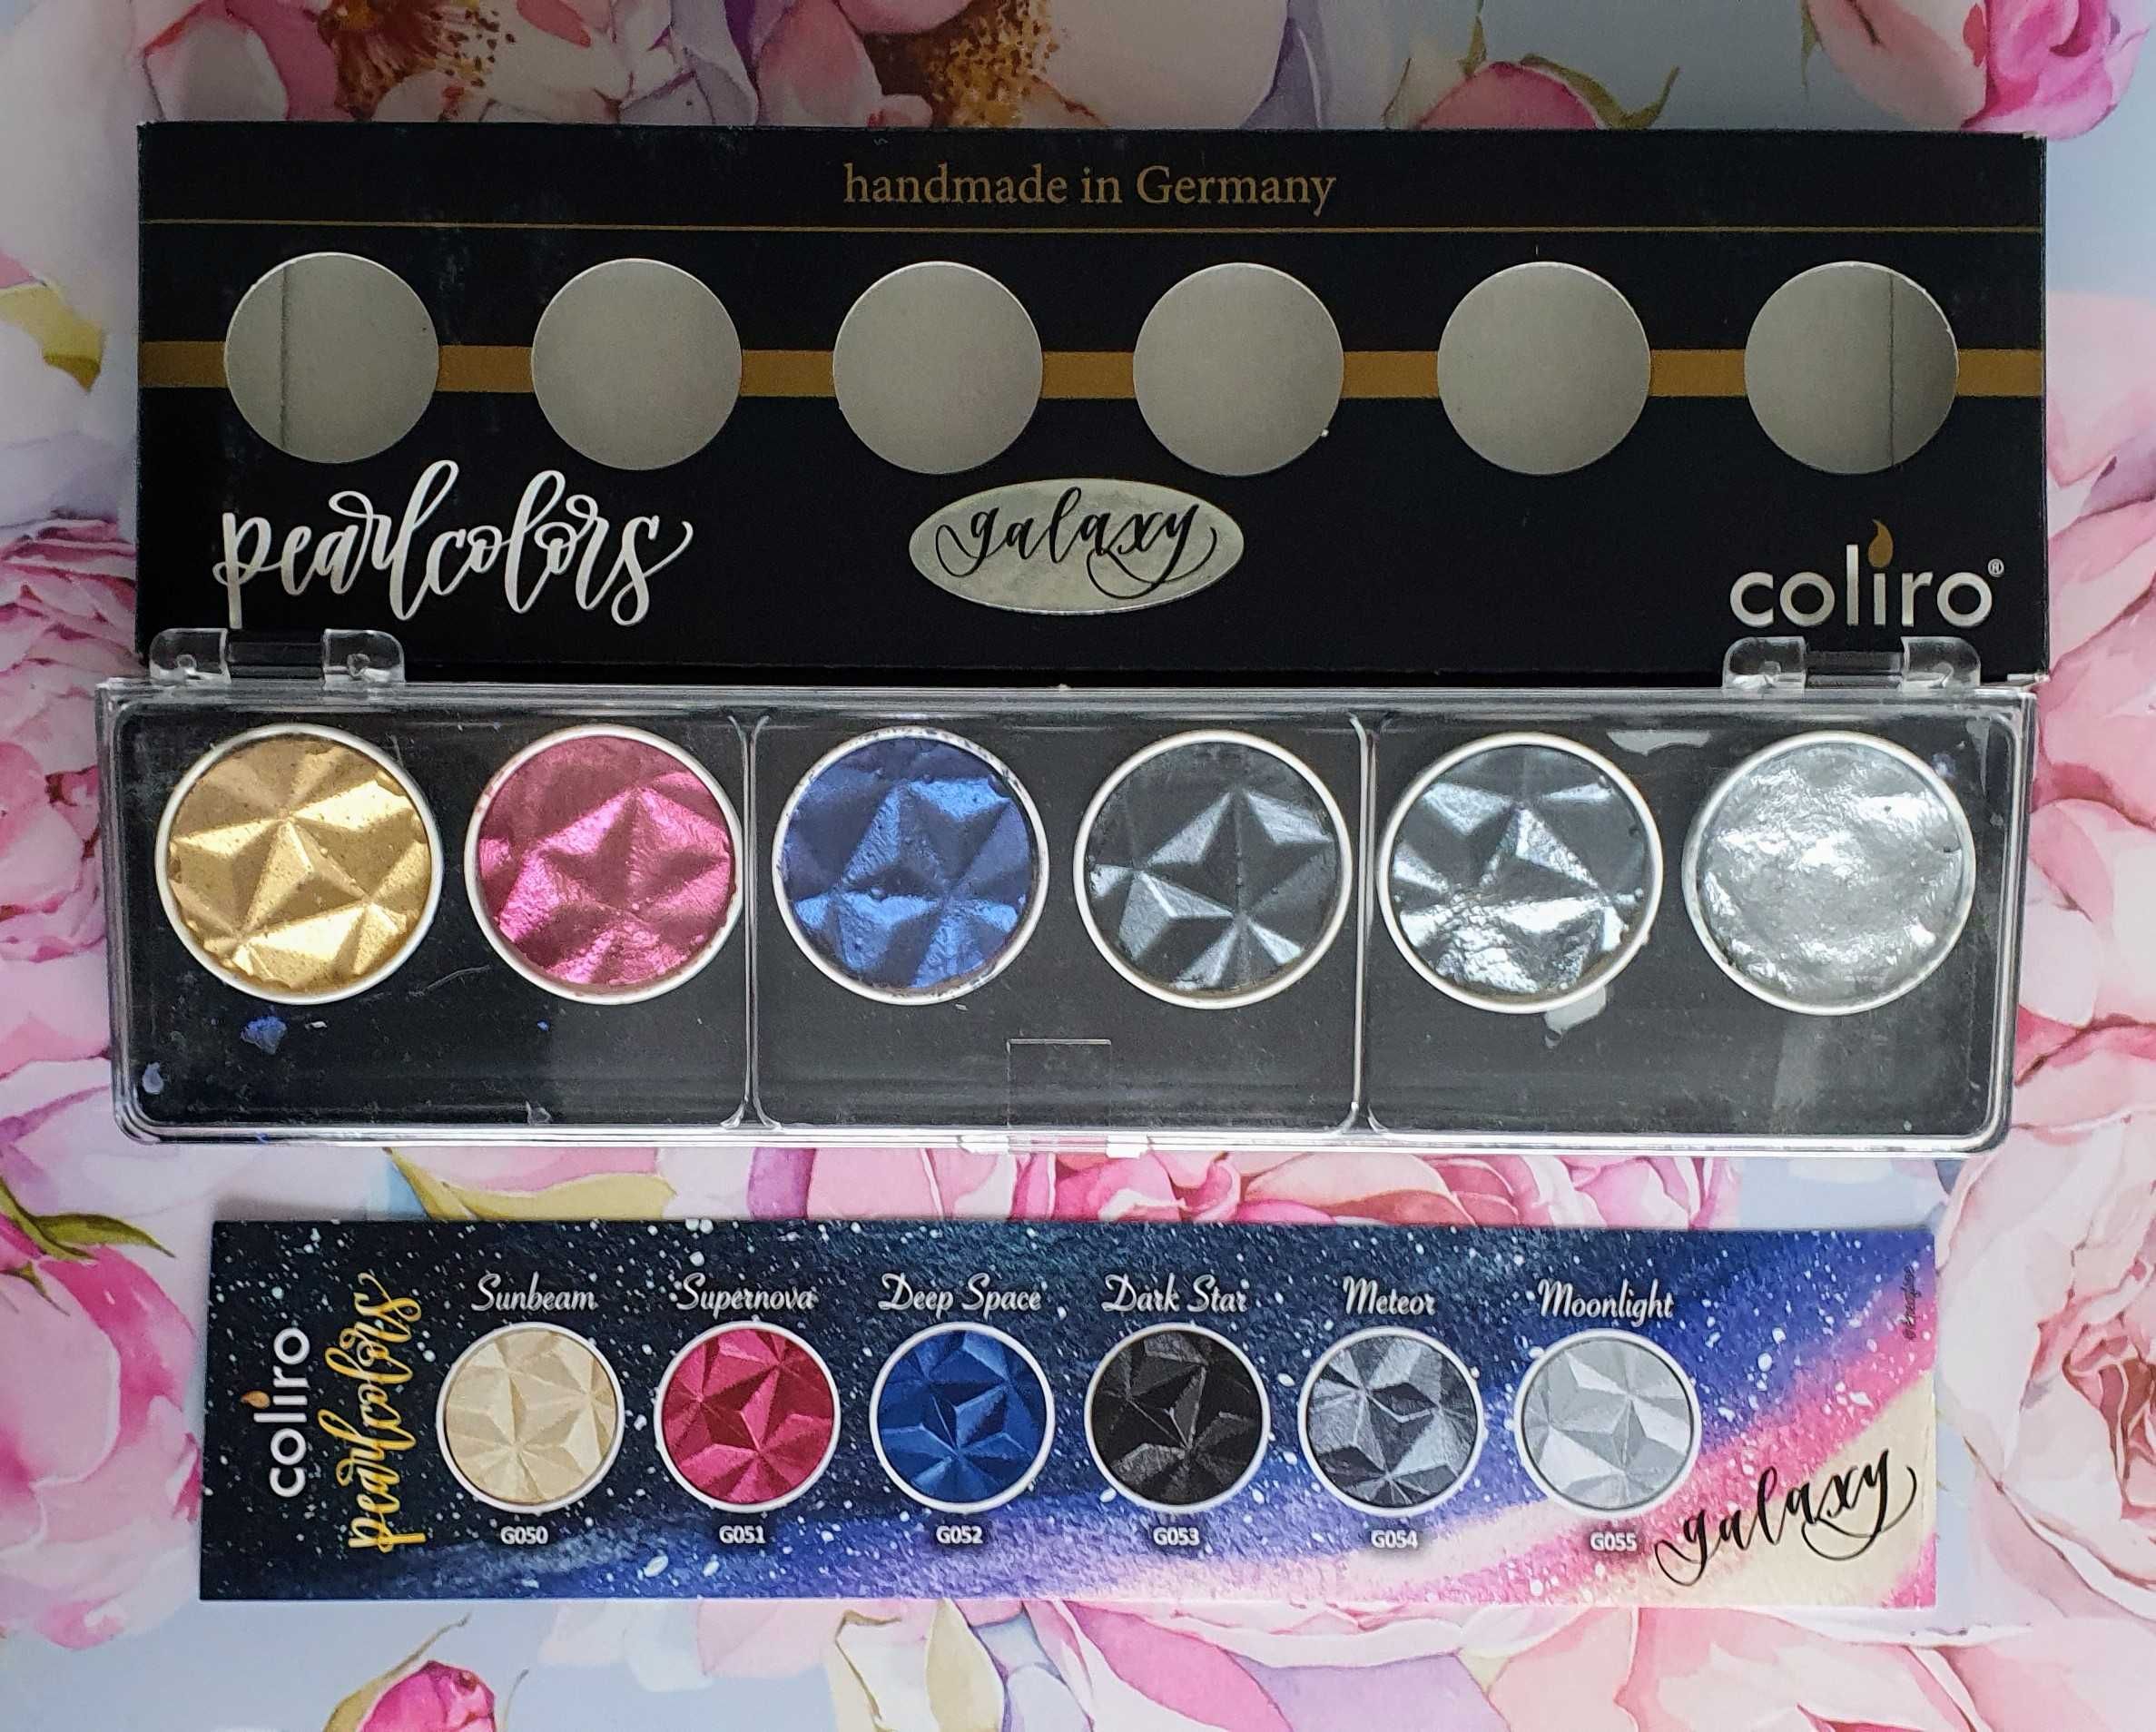 Coliro Pearlcolors Galaxy akwarele pigmenty metaliczne perłowe